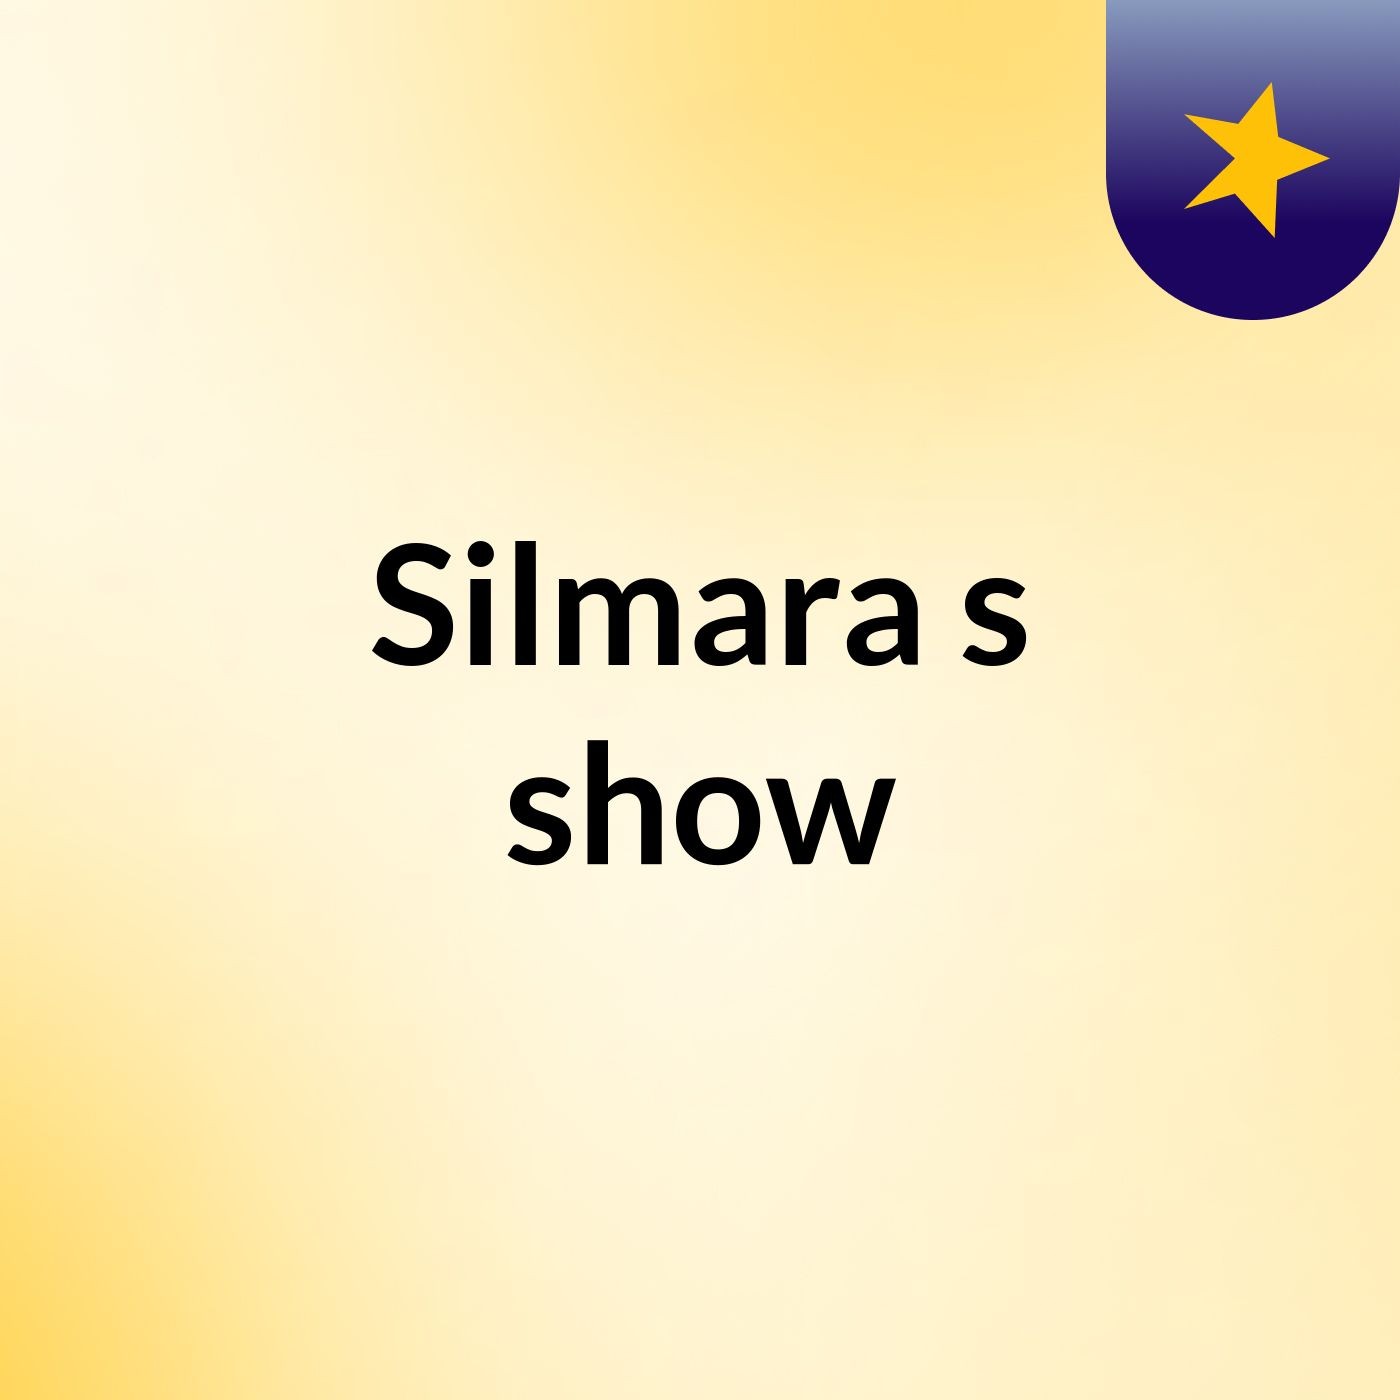 Silmara's show